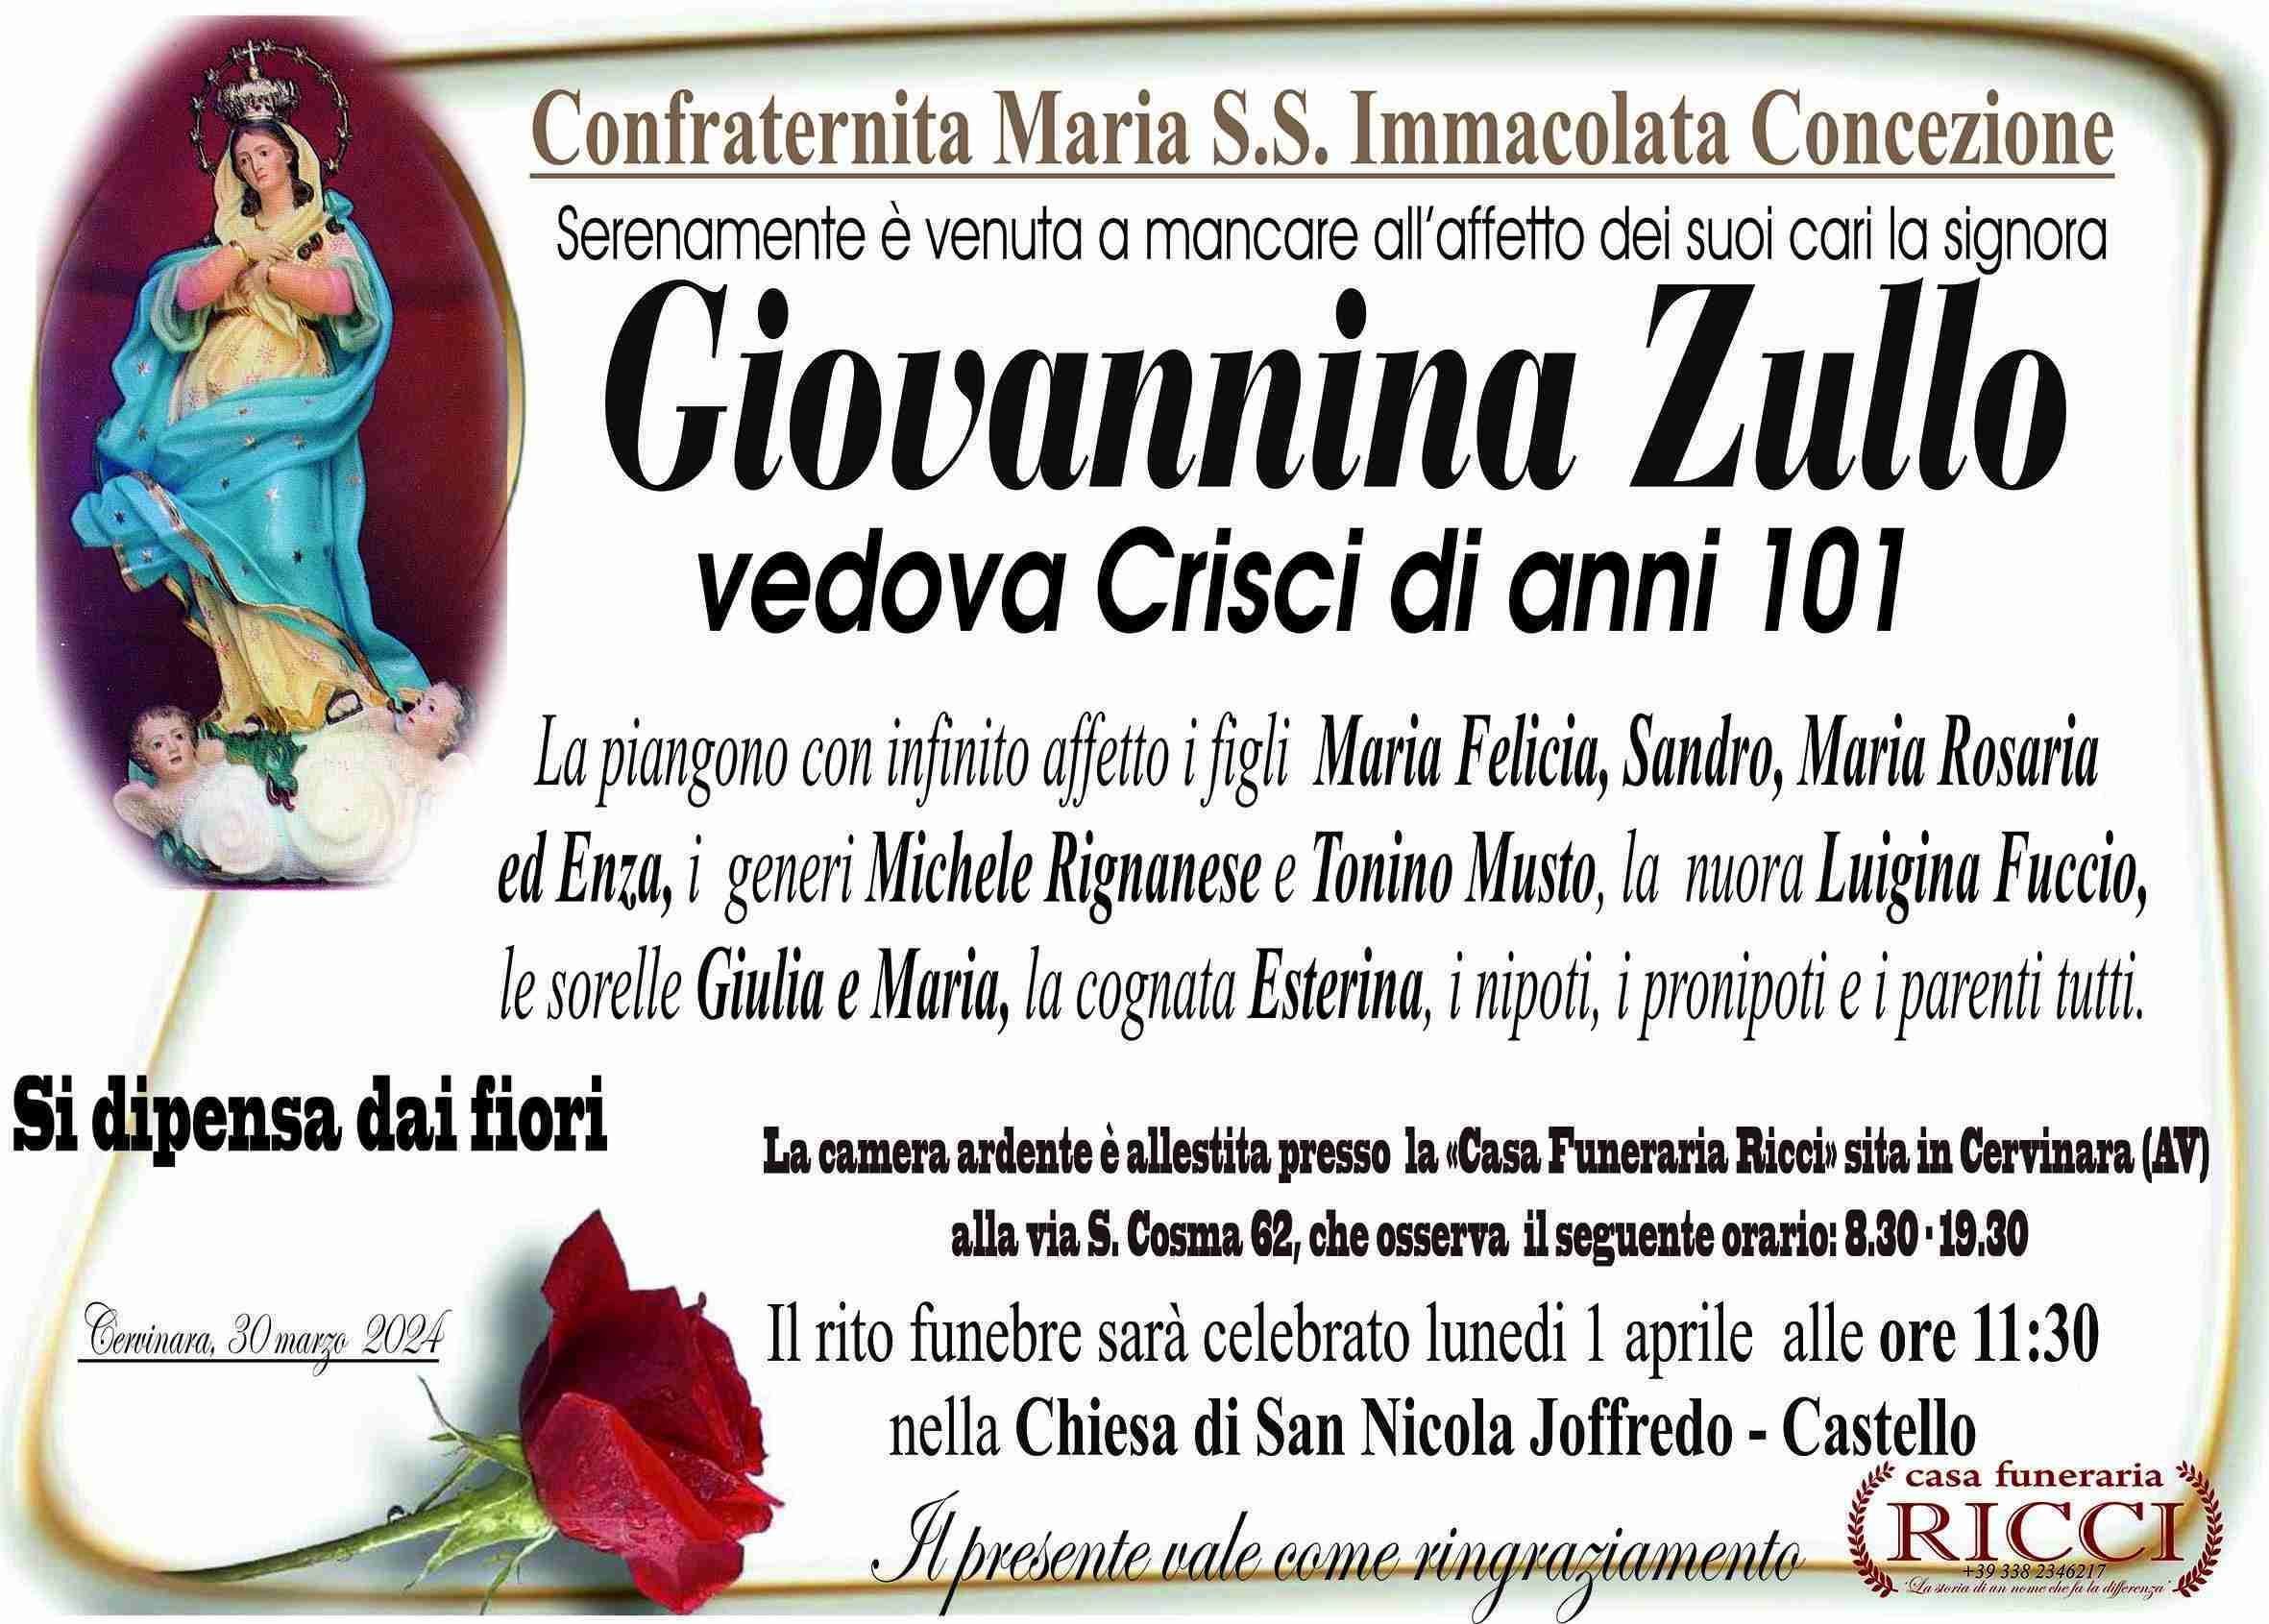 Giovannina Zullo